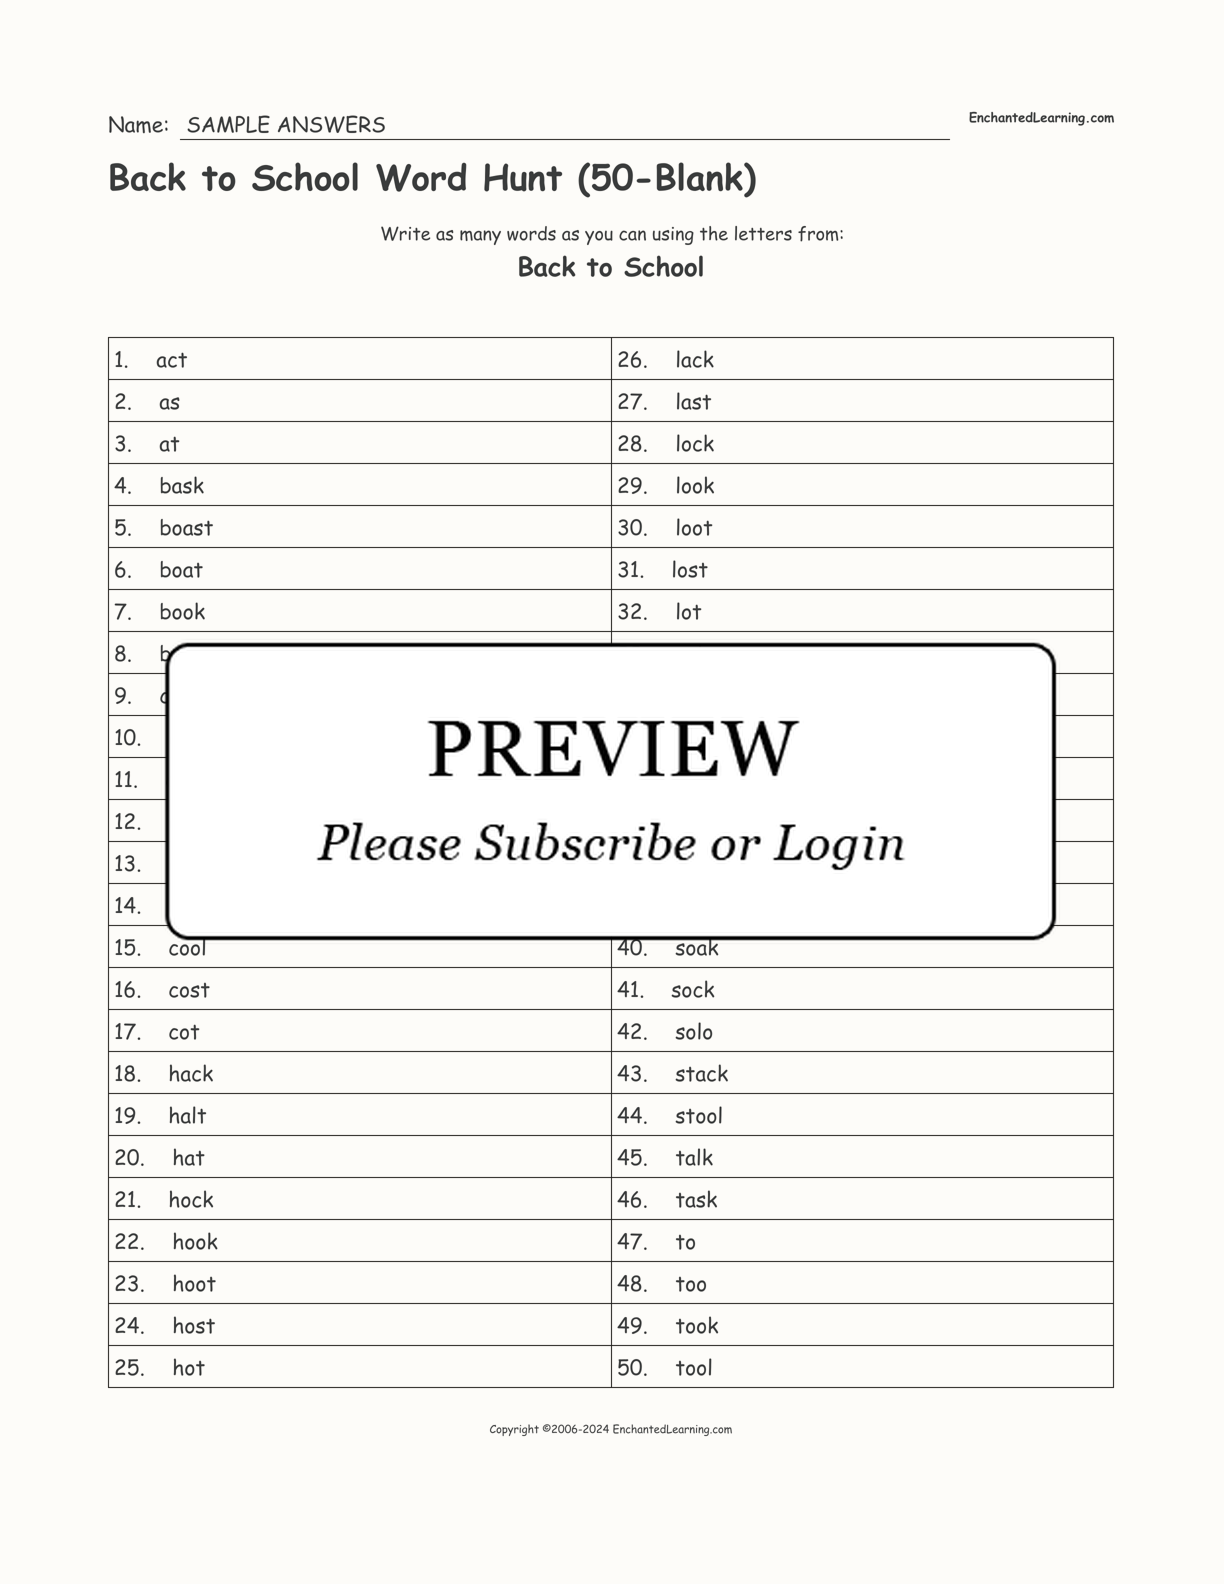 Back to School Word Hunt (50-Blank) interactive worksheet page 2